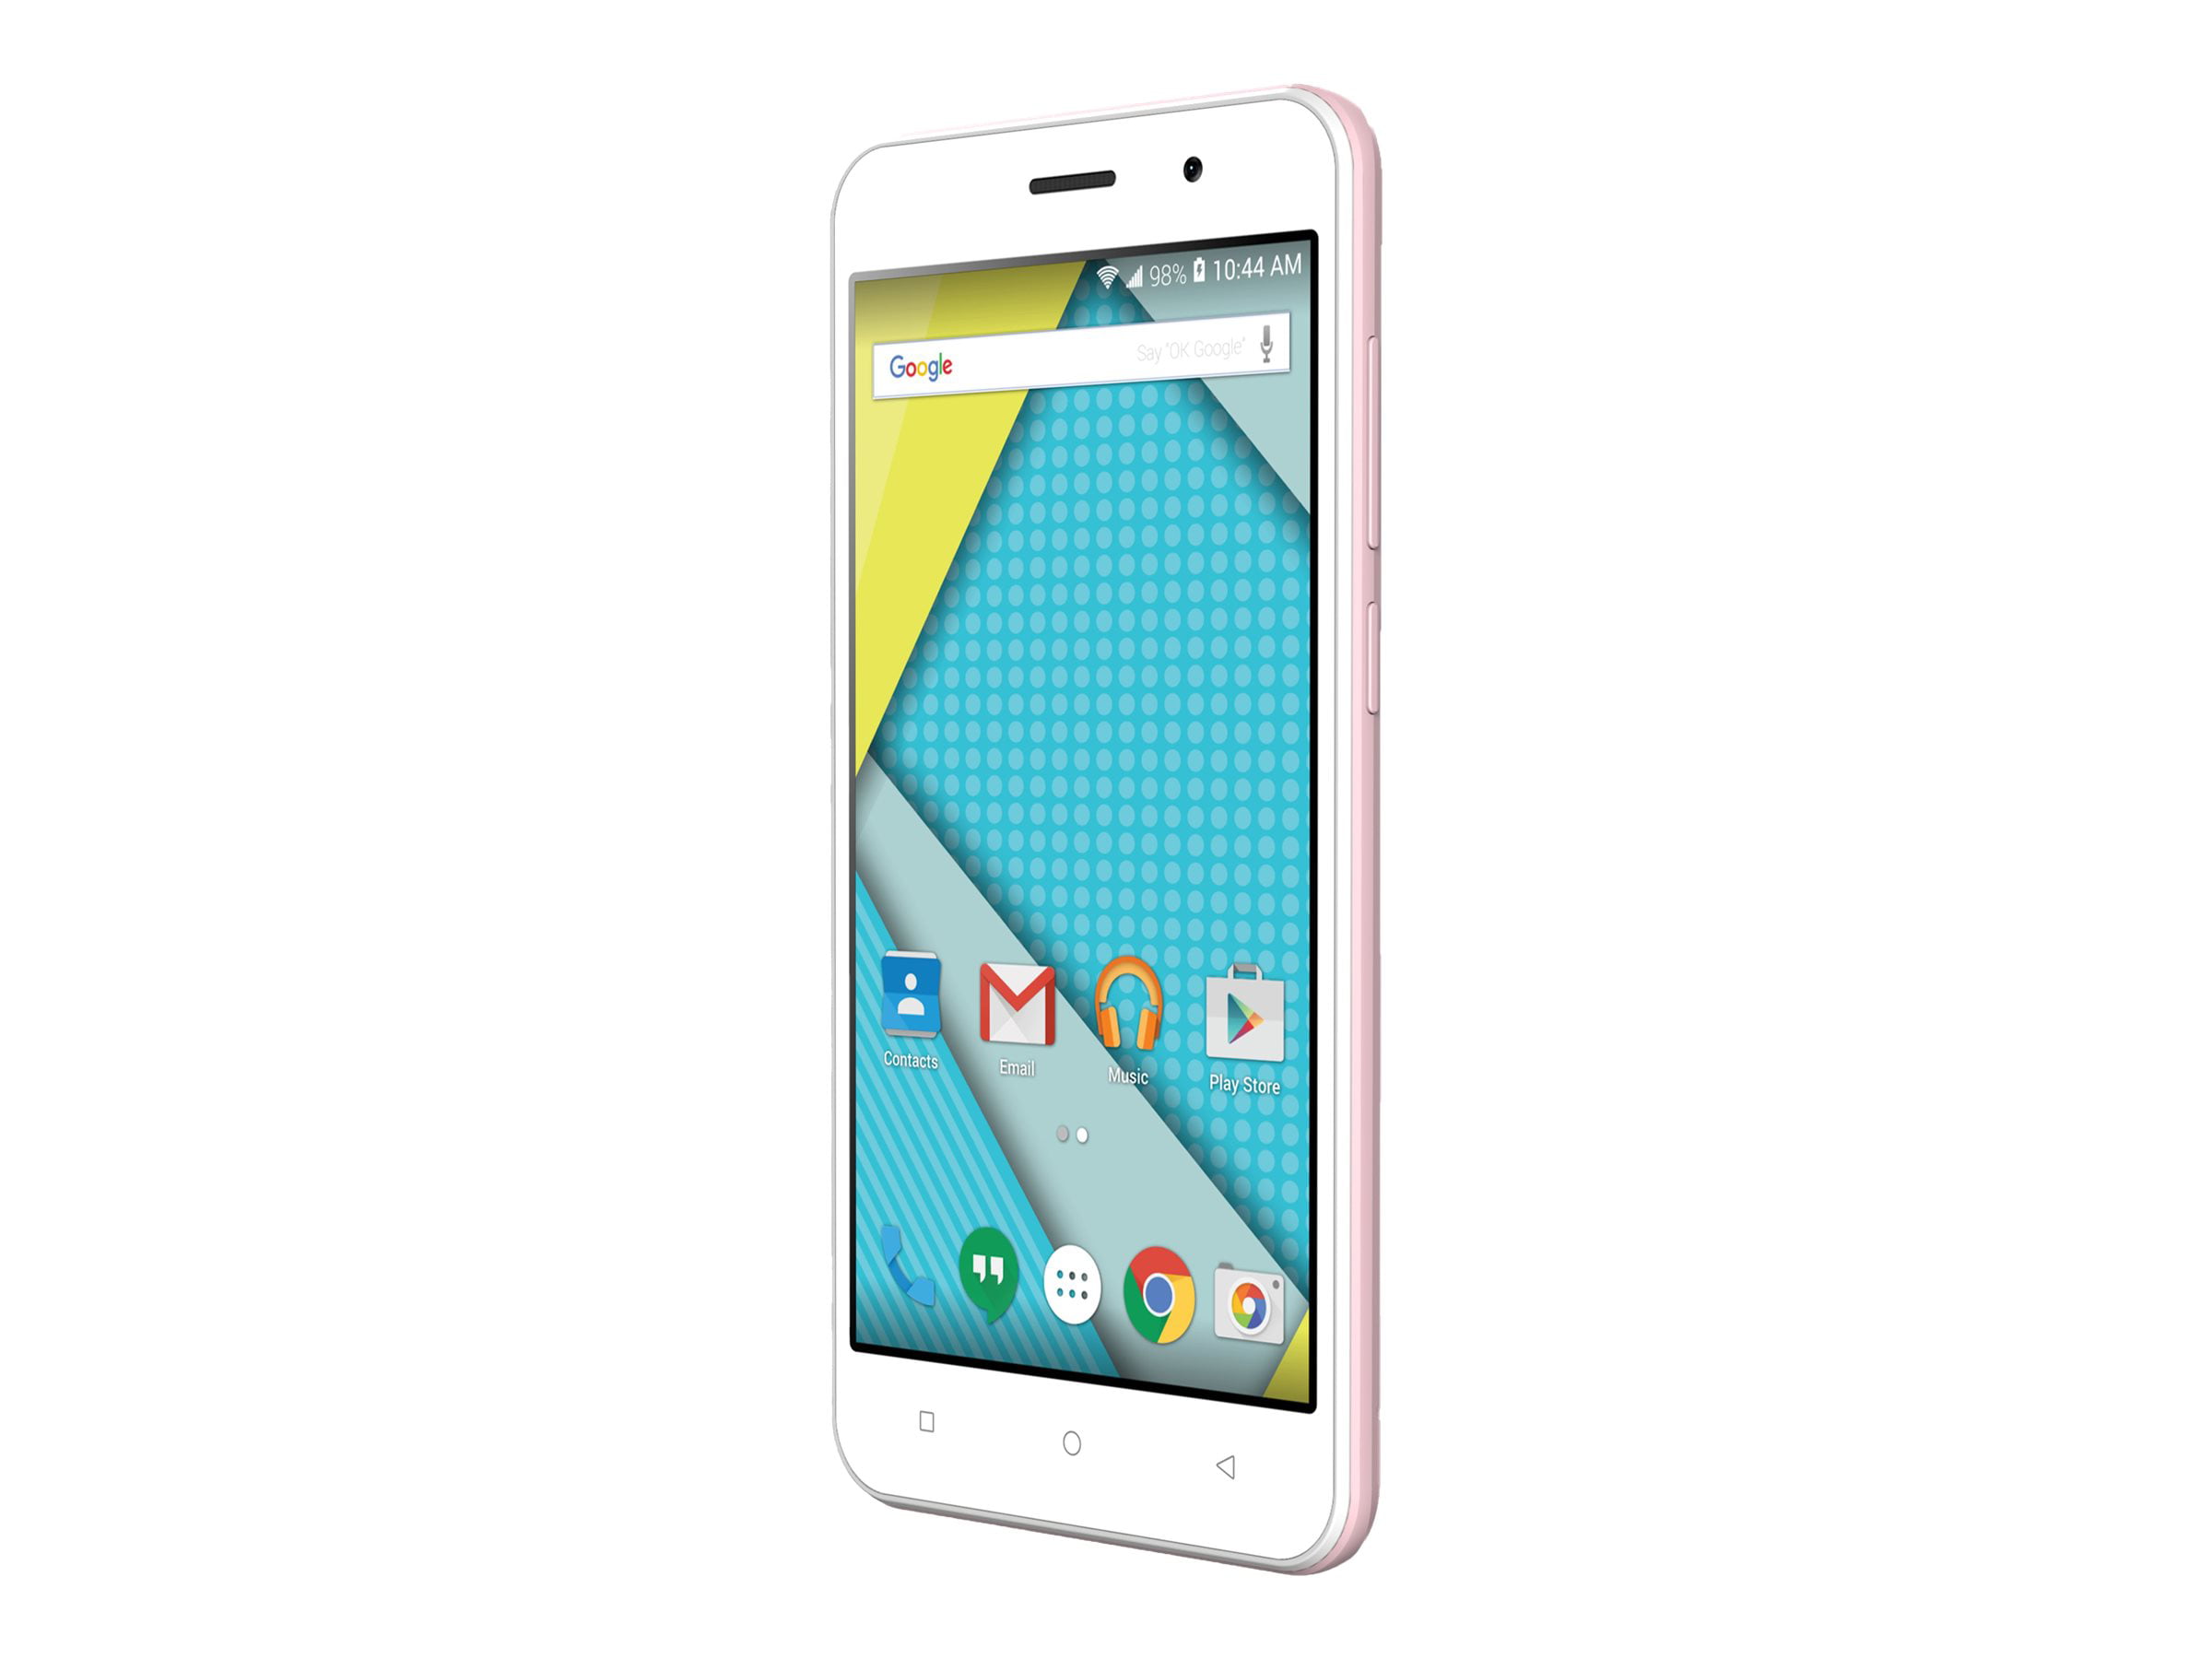 Plum Compass - Unlocked 4G GSM Smart Cell Phone Android 8.0 Quad core 8MP Camera ATT Tmobile Metro - Rose Gold